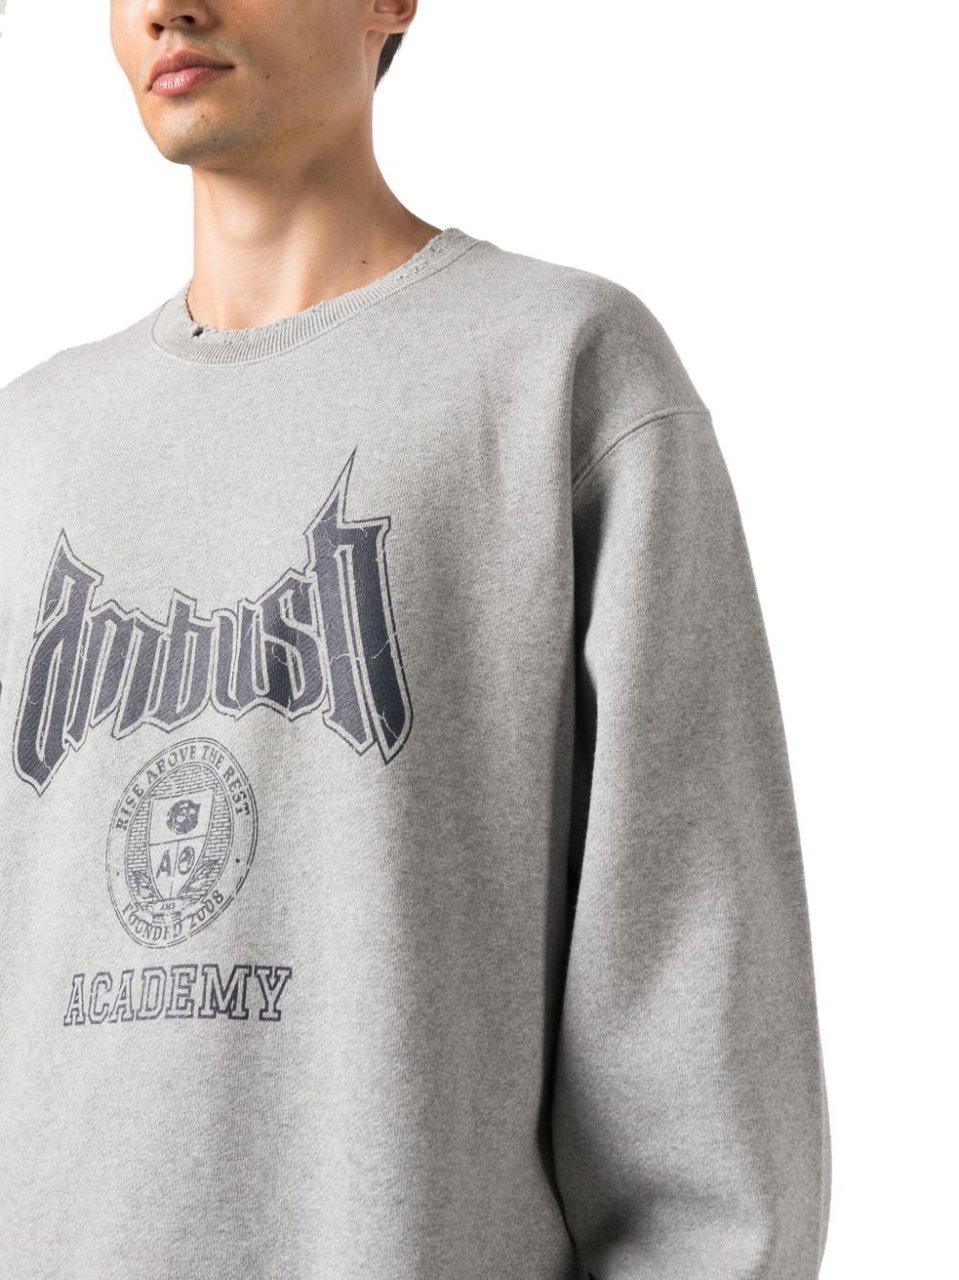 AMBUSH Sweaters Gray Grijs